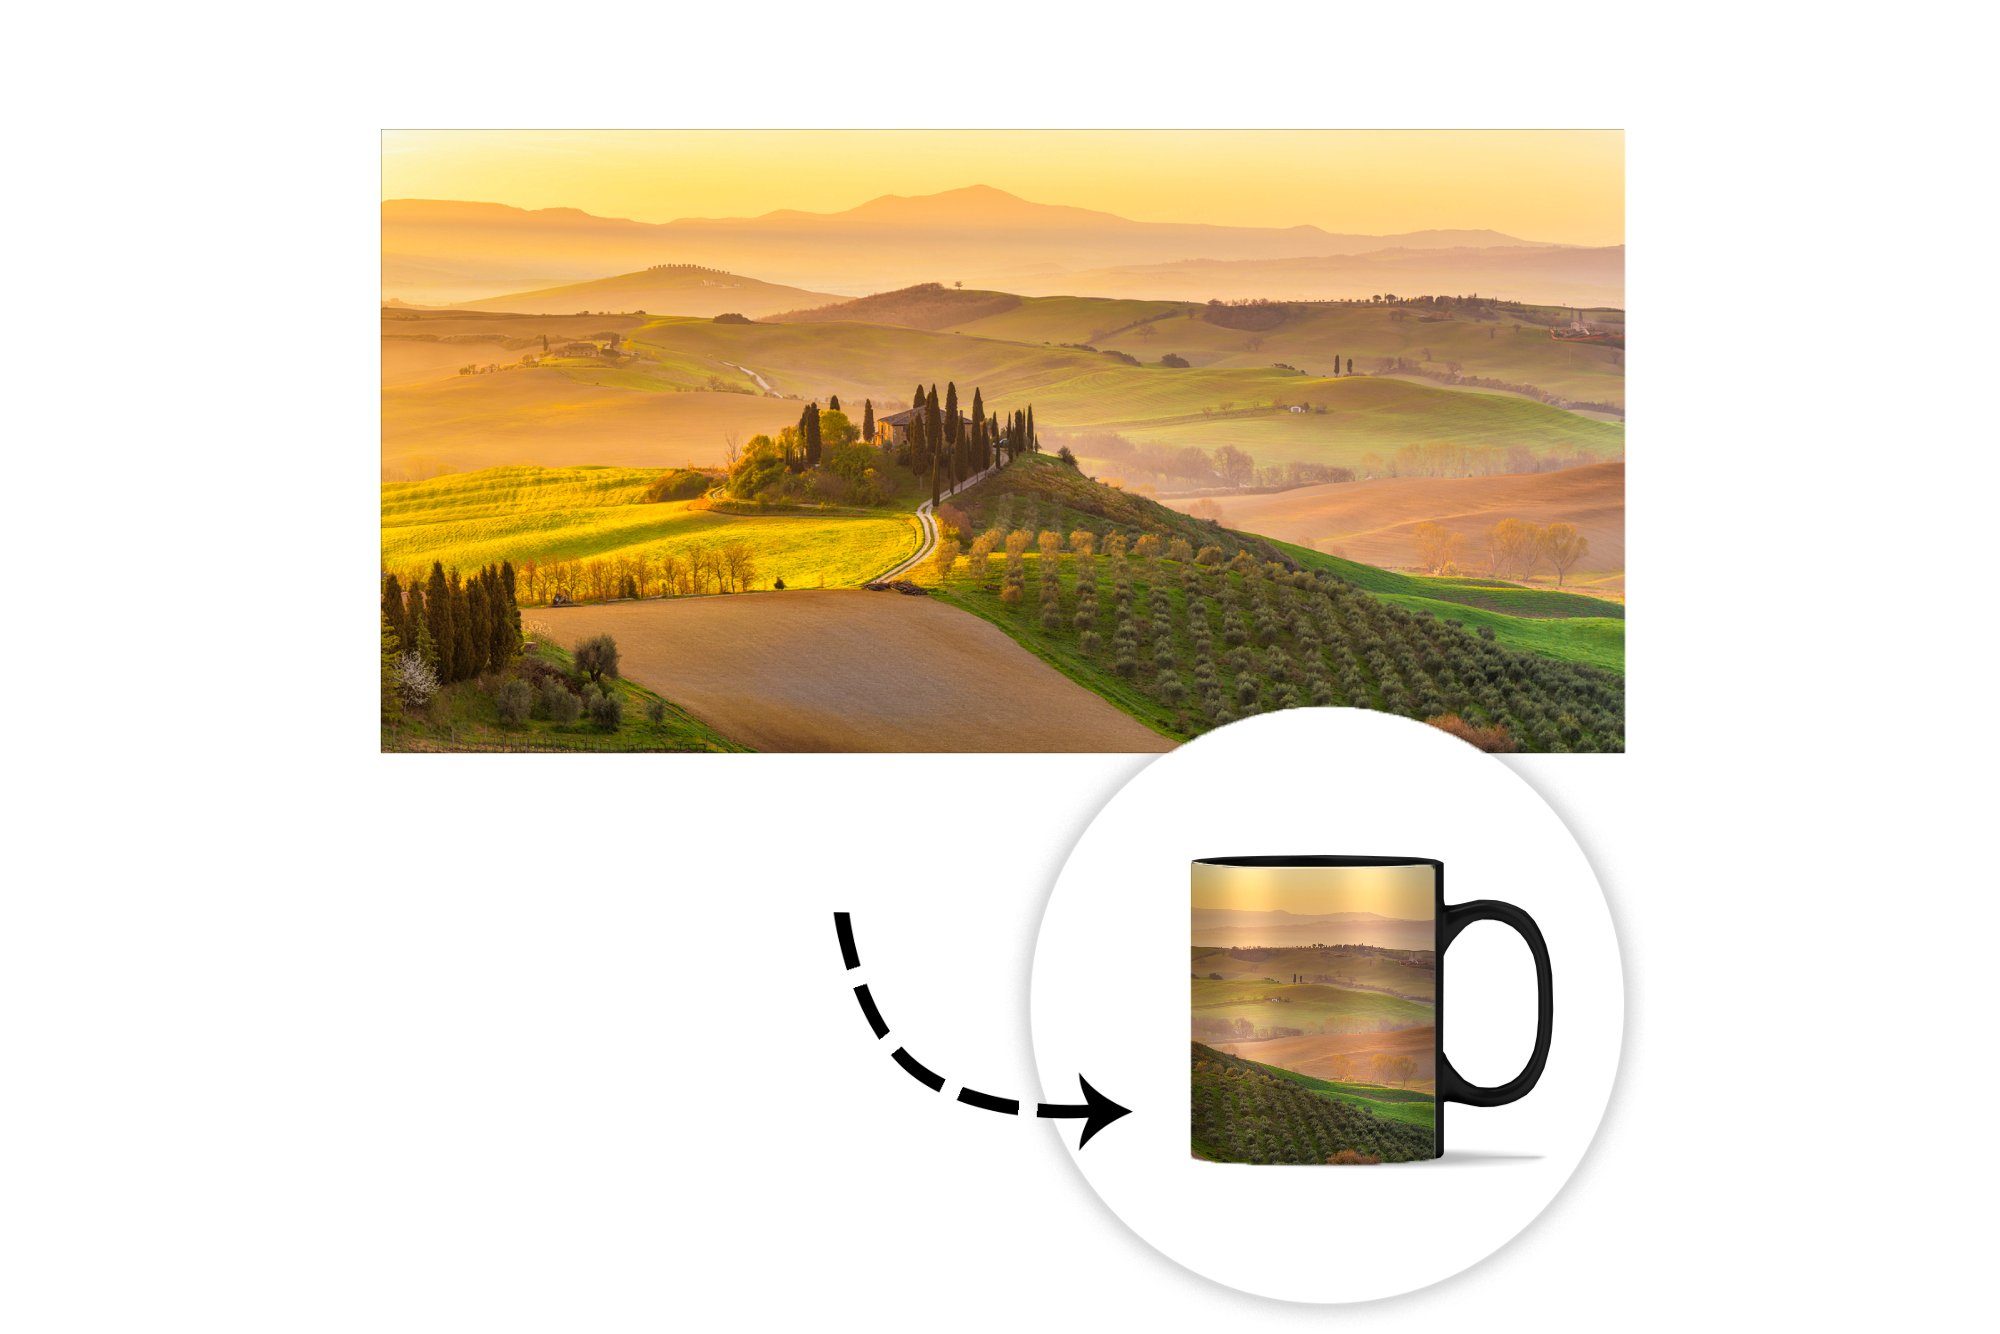 - MuchoWow Toskana Hügel Keramik, Teetasse, Landschaft, Zaubertasse, - Geschenk Tasse Kaffeetassen, Farbwechsel,